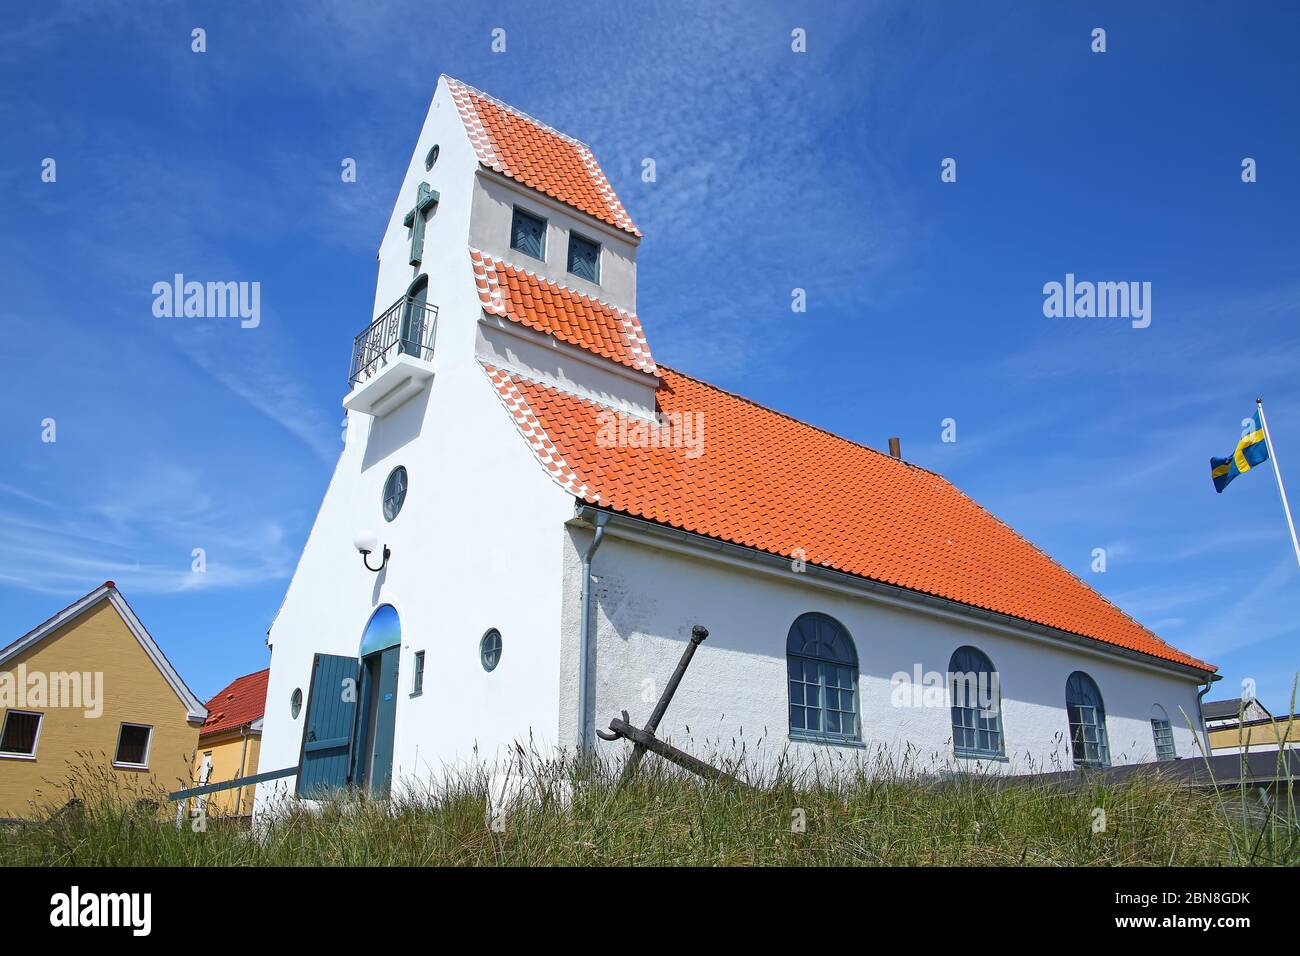 Swedish Seamen's Church, traditional white building with orange roof, located in Skagen, Denmark. Stock Photo